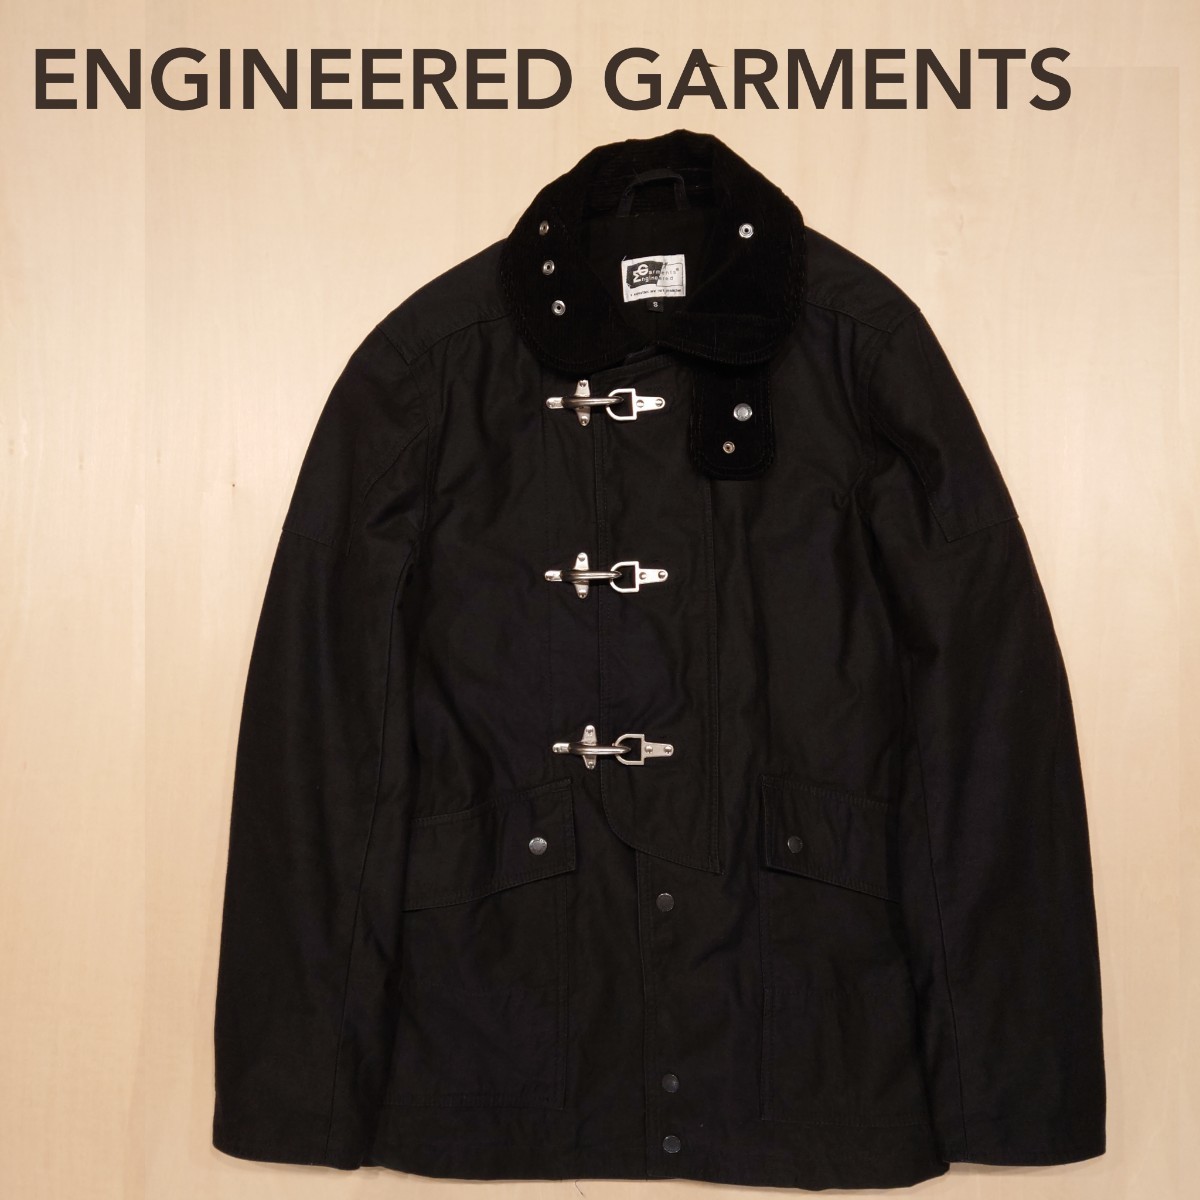 engineered garmentsfai Ya-Man jacket coat black color engineered garments USA made size S 2401